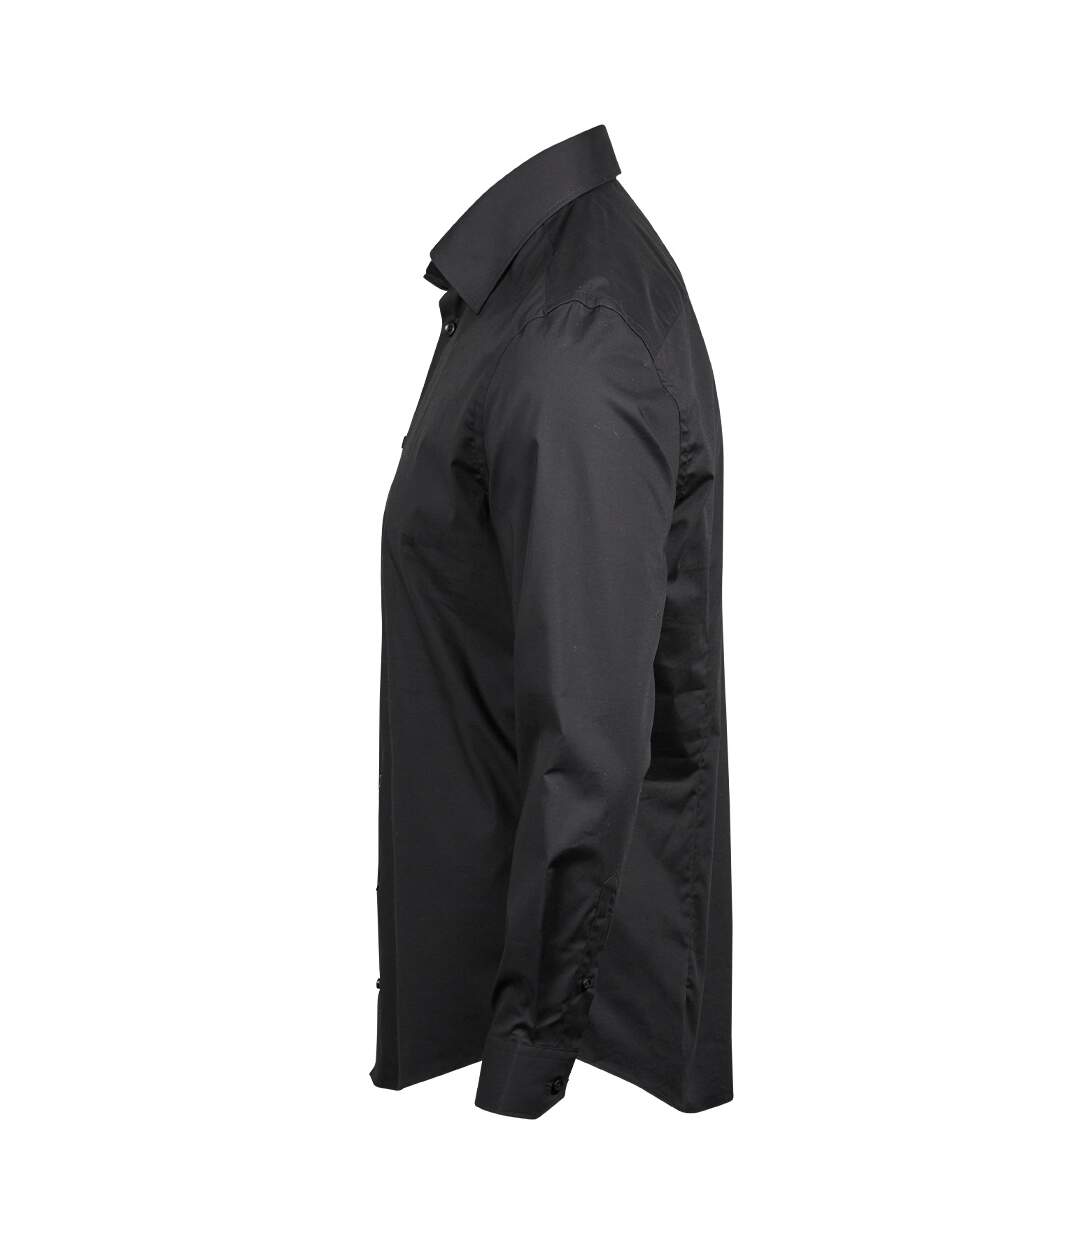 Tee Jays Mens Luxury Stretch Long-Sleeved Shirt (Black)